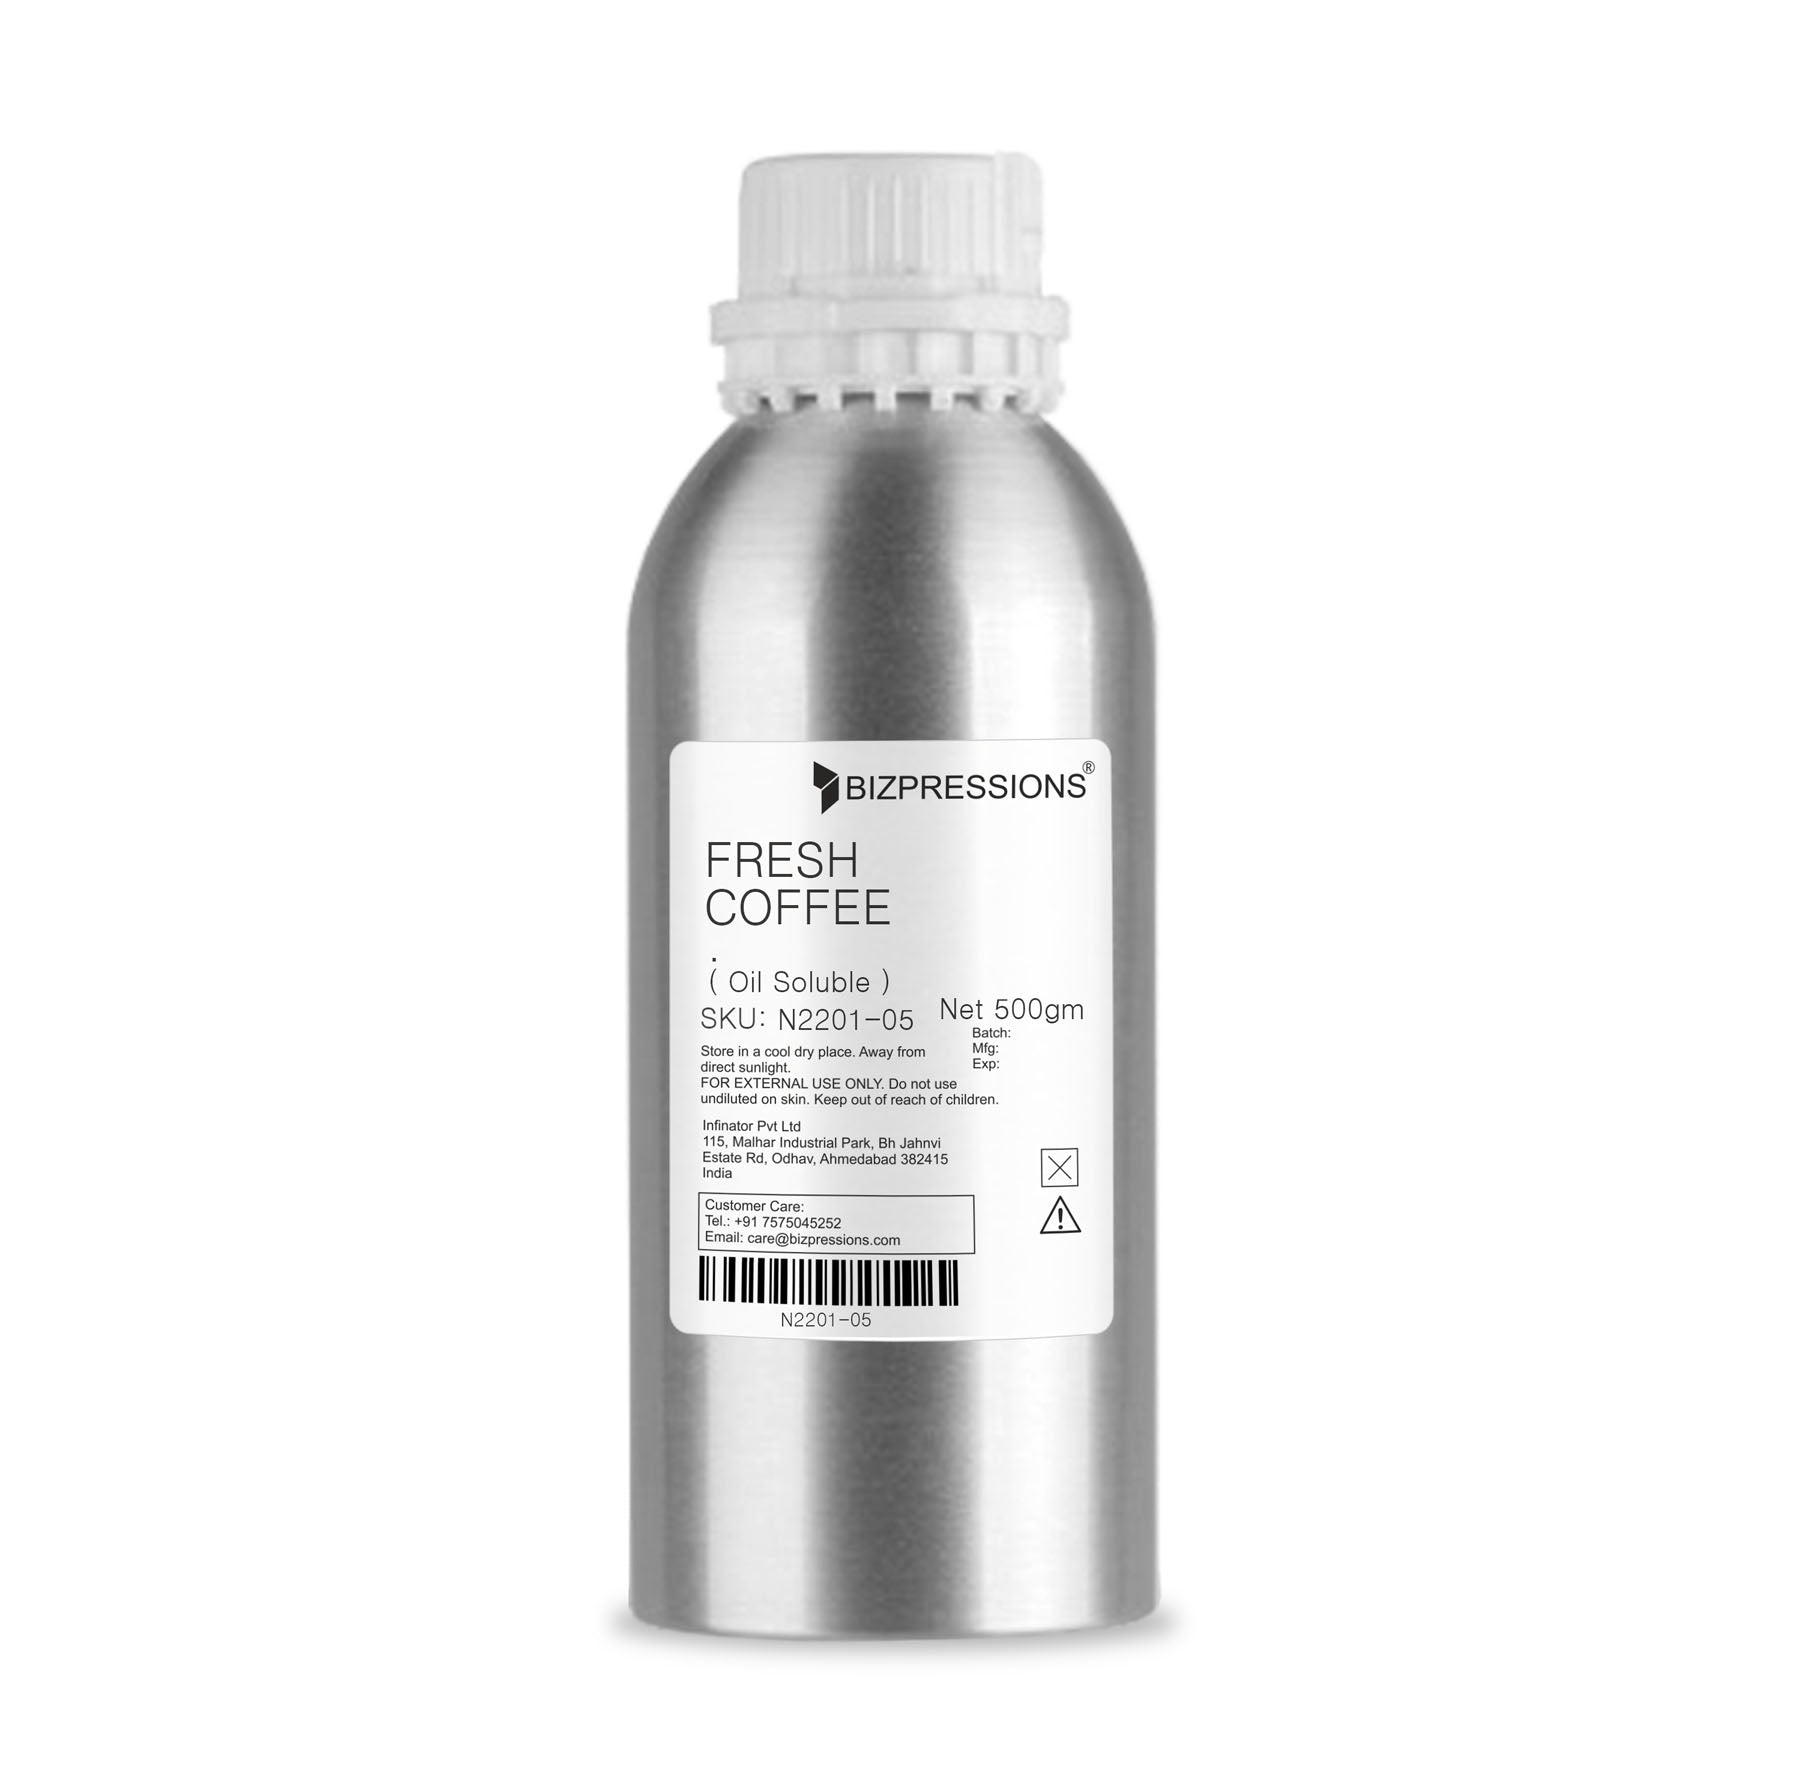 FRESH COFFEE - Fragrance ( Oil Soluble ) - 500 gm